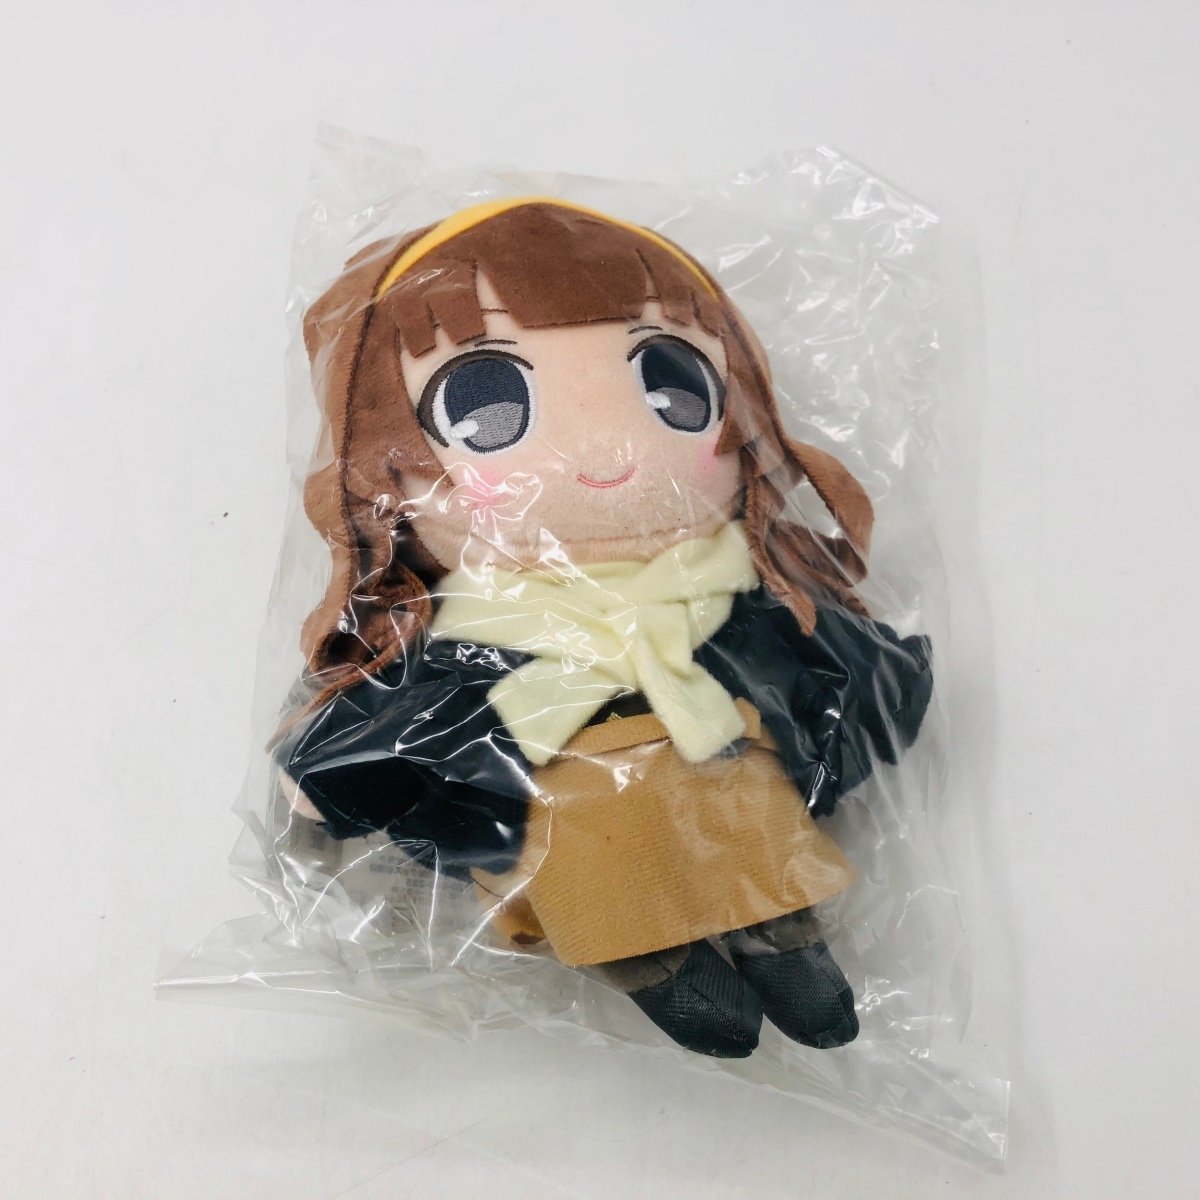 Fleet Collection Plush Doll|Buyee - Japan Proxy Shopping Service